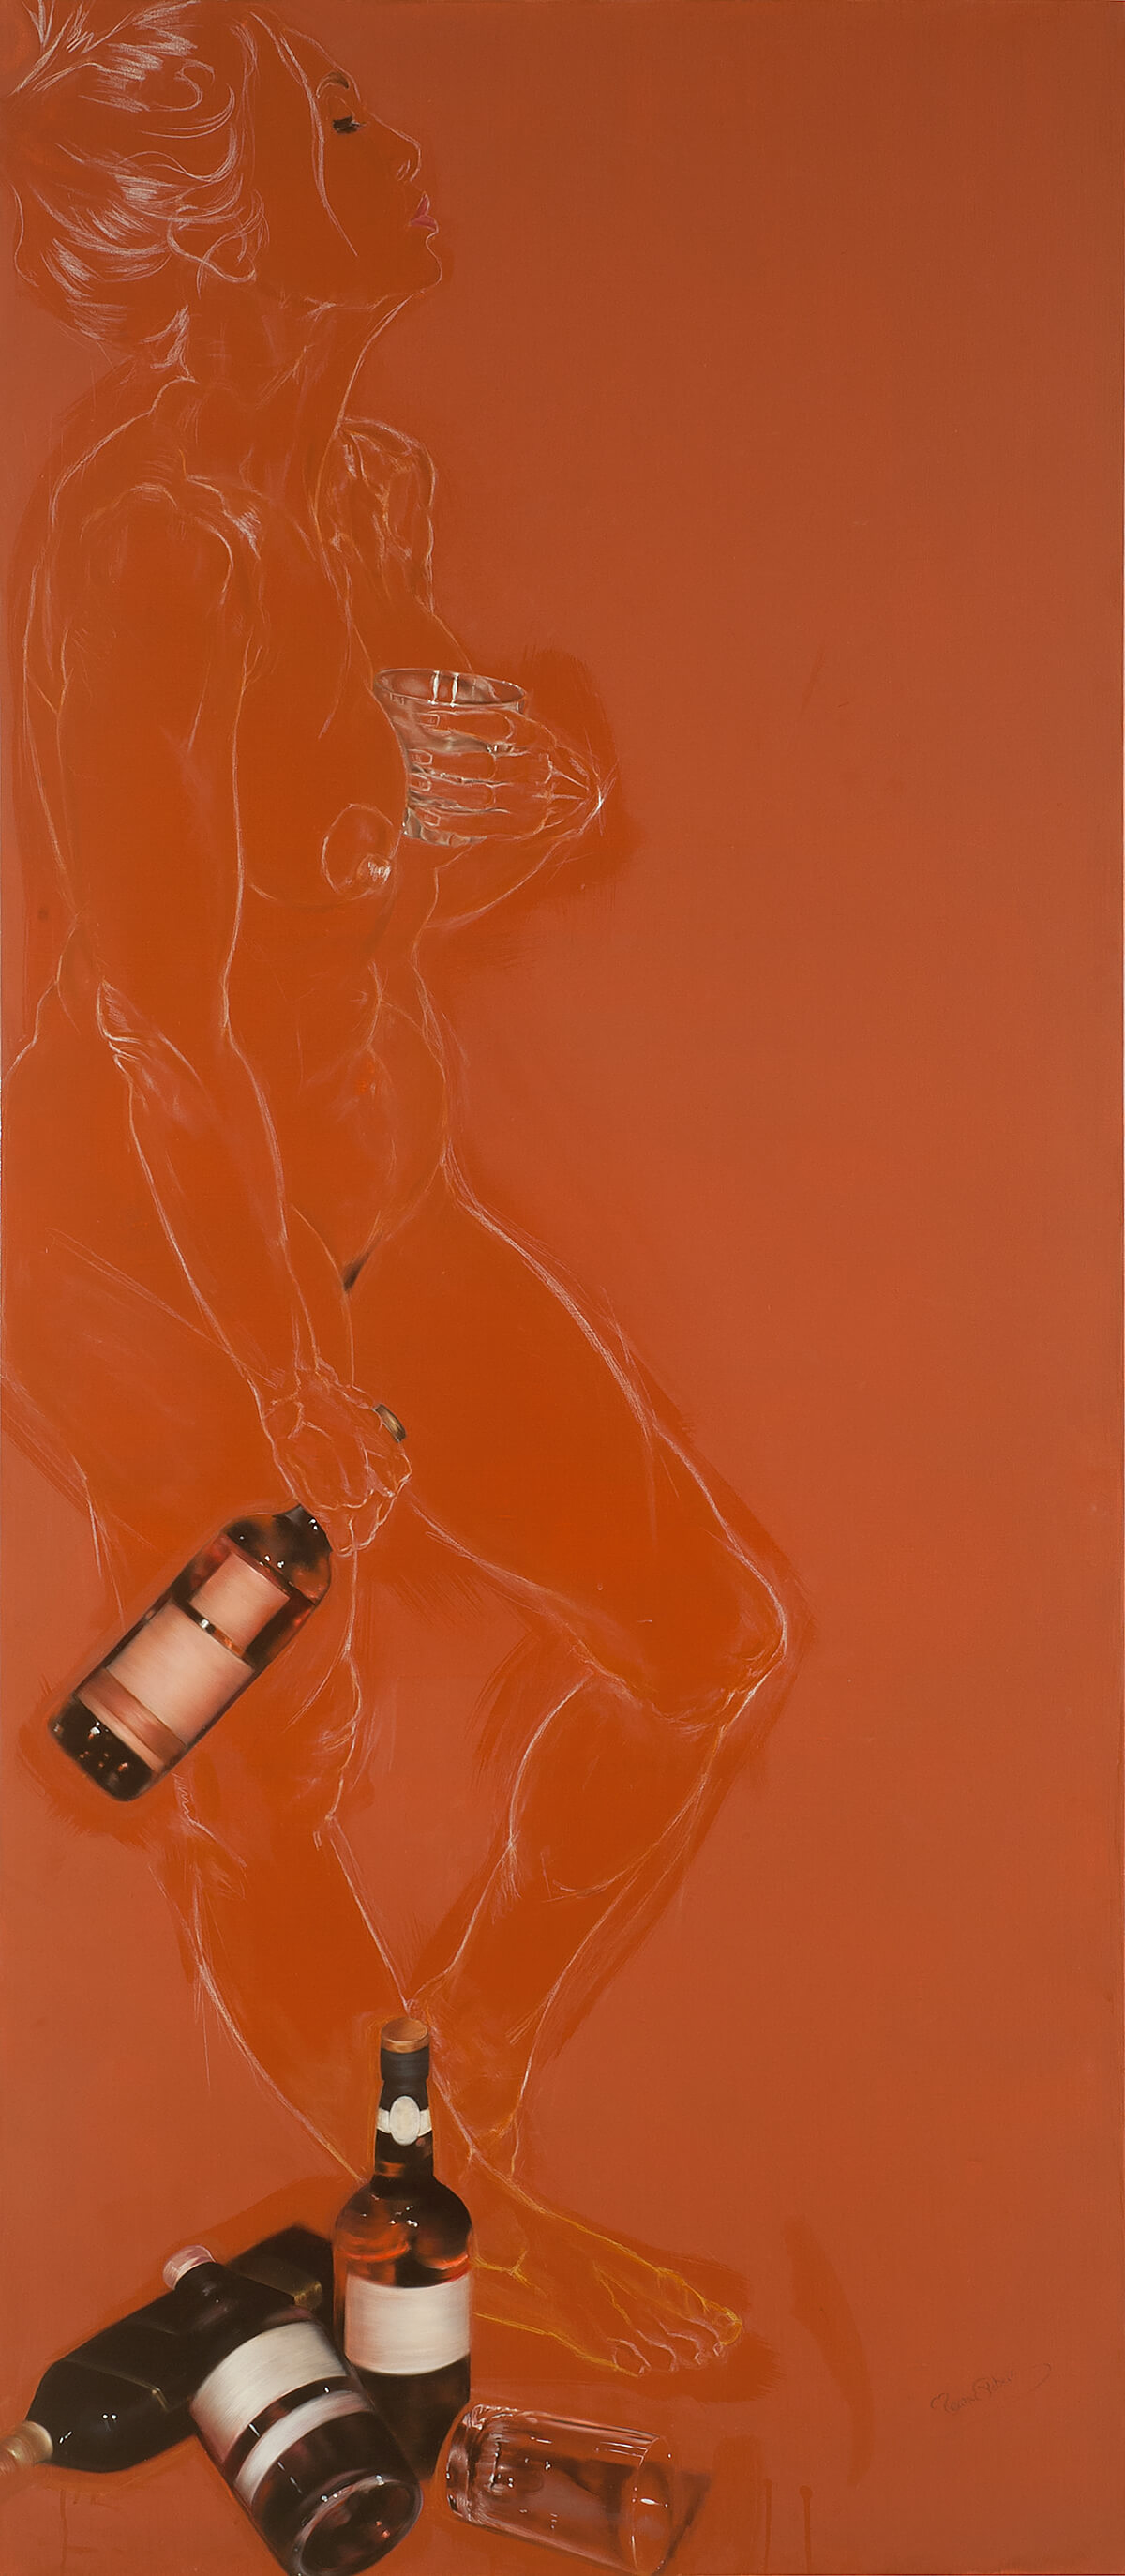 Silhouette of woman holding bottles against an orange background by artist Mouna Rebeiz